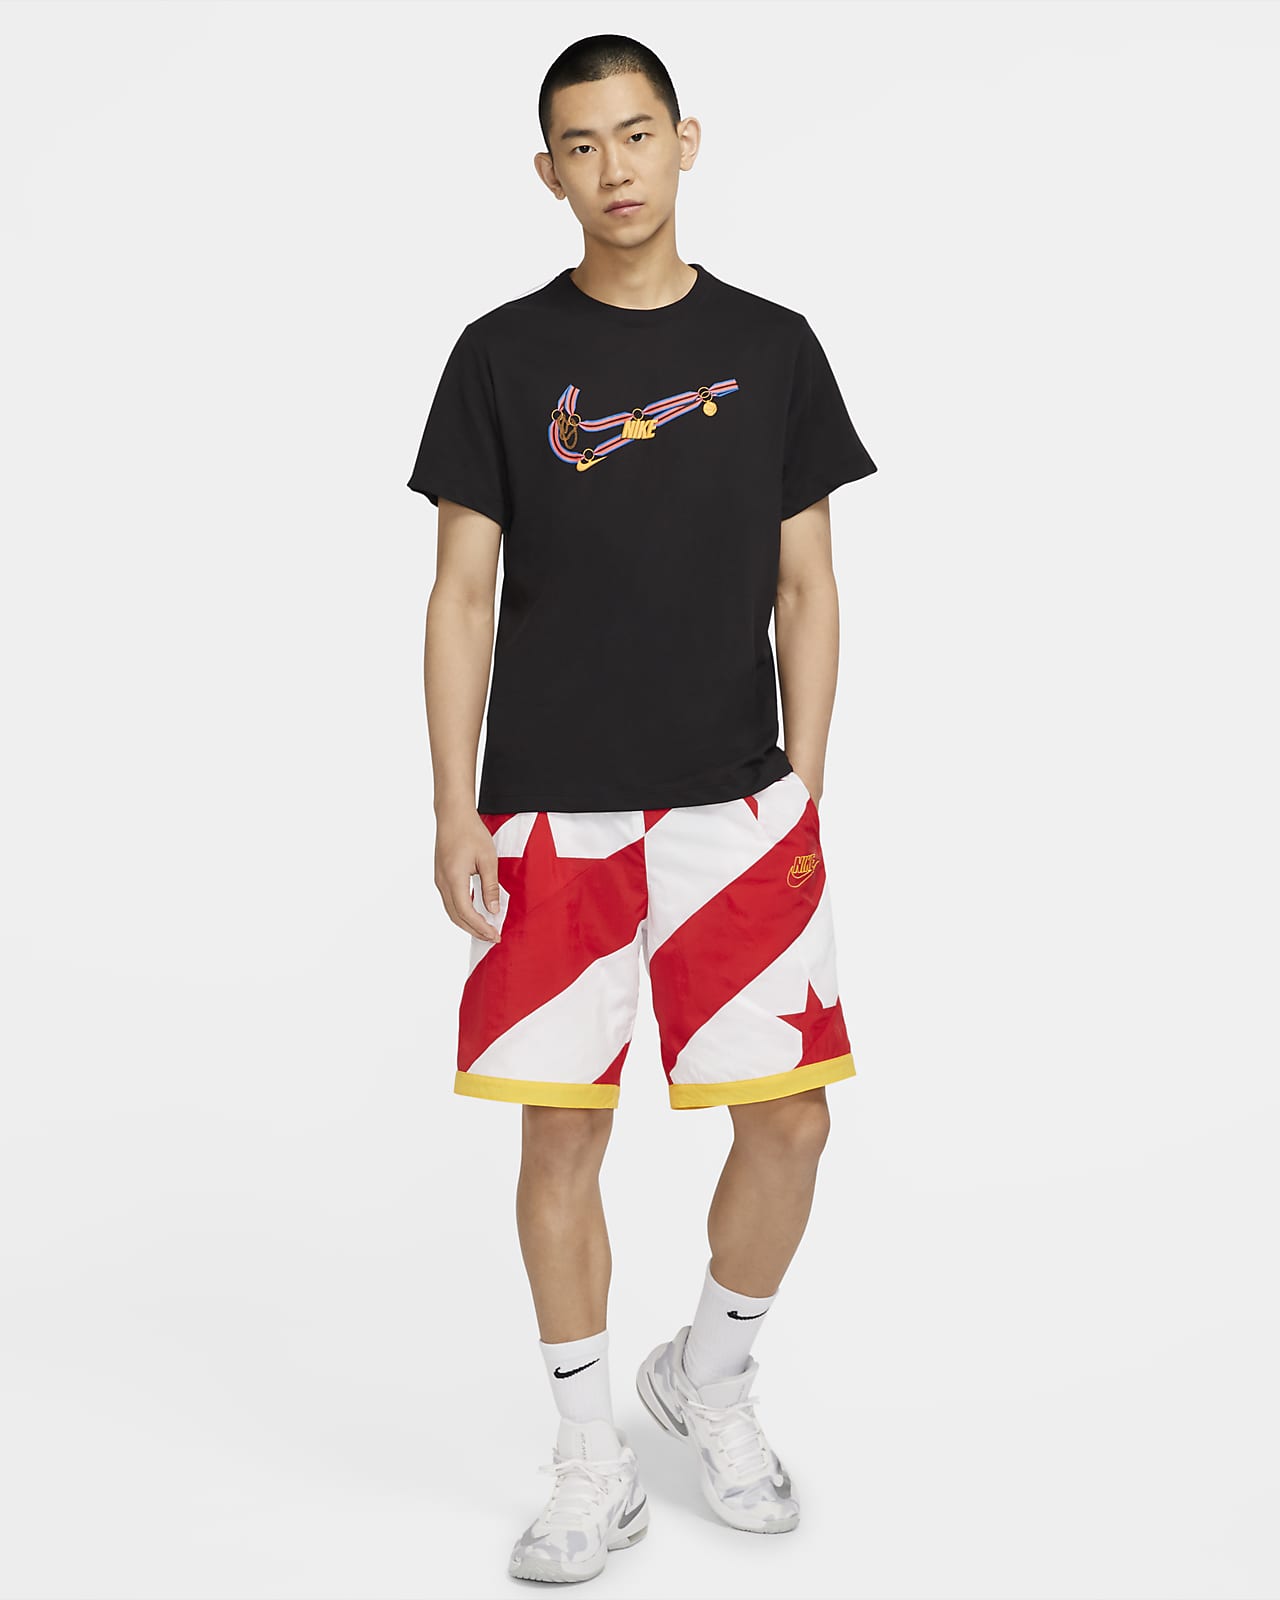 Men's Nike Dri-Fit Basketball T-Shirt 